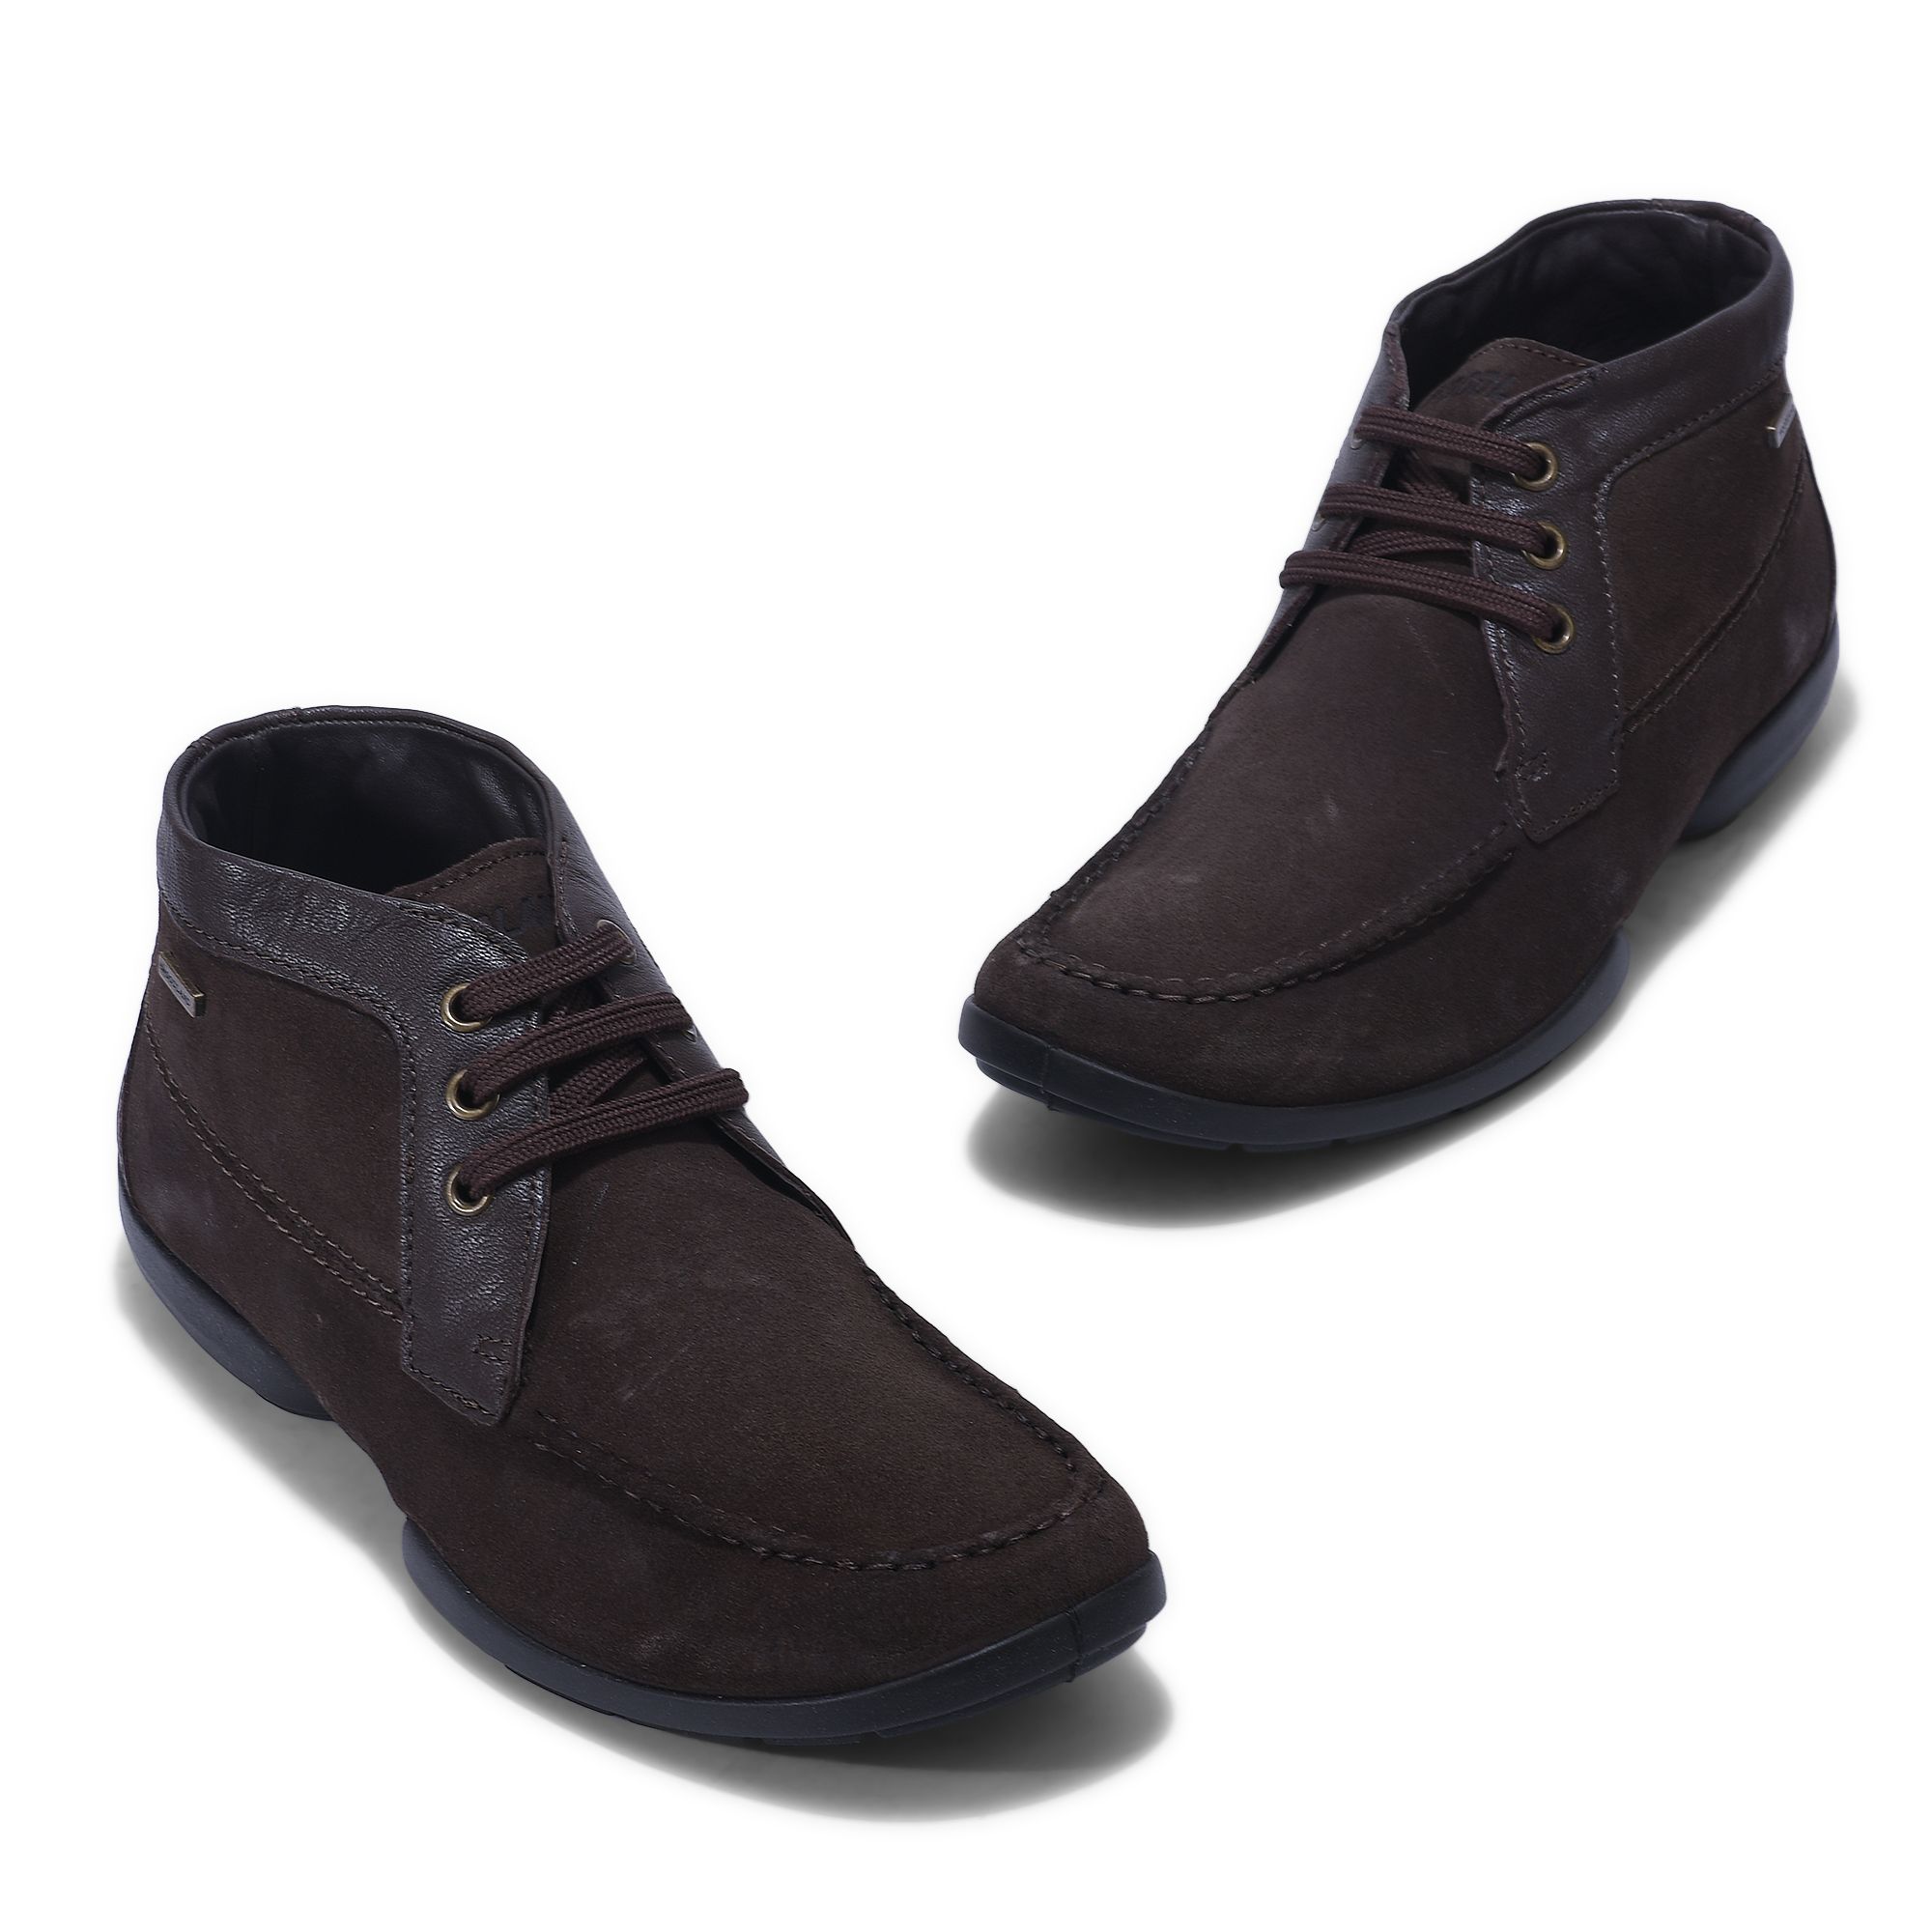 Woodland Dark Brown chukka shoes